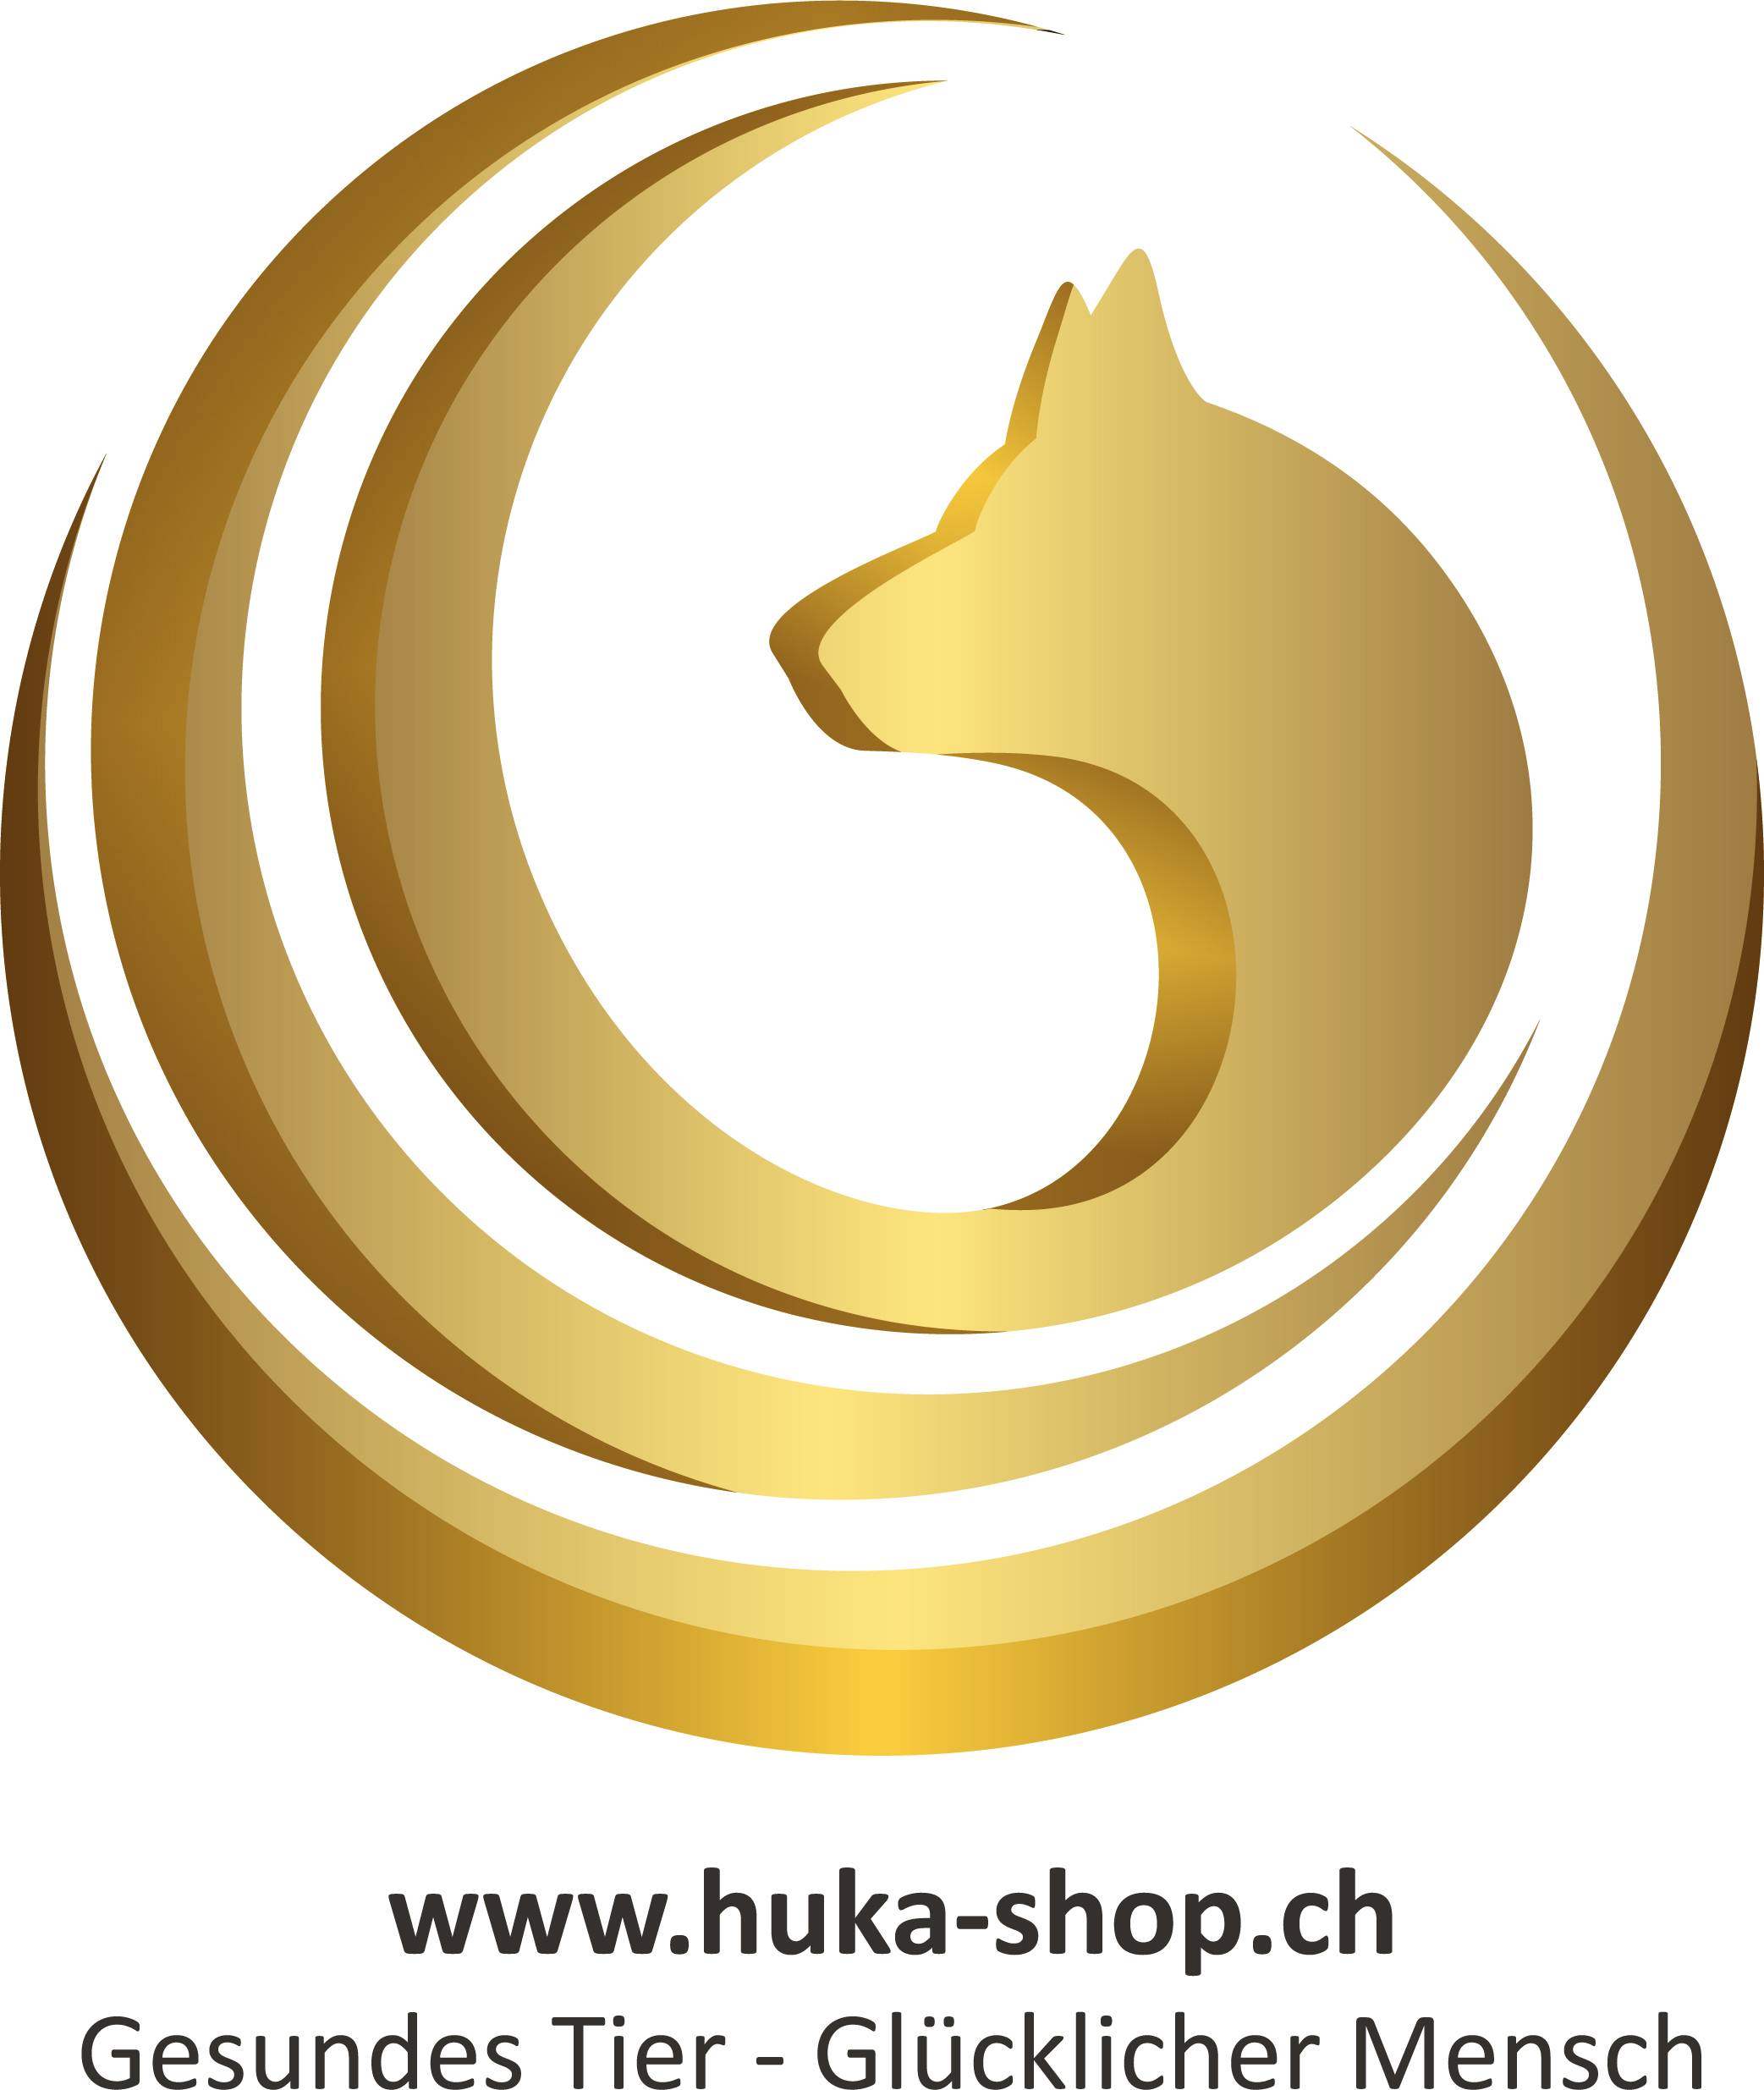 Huka Shop